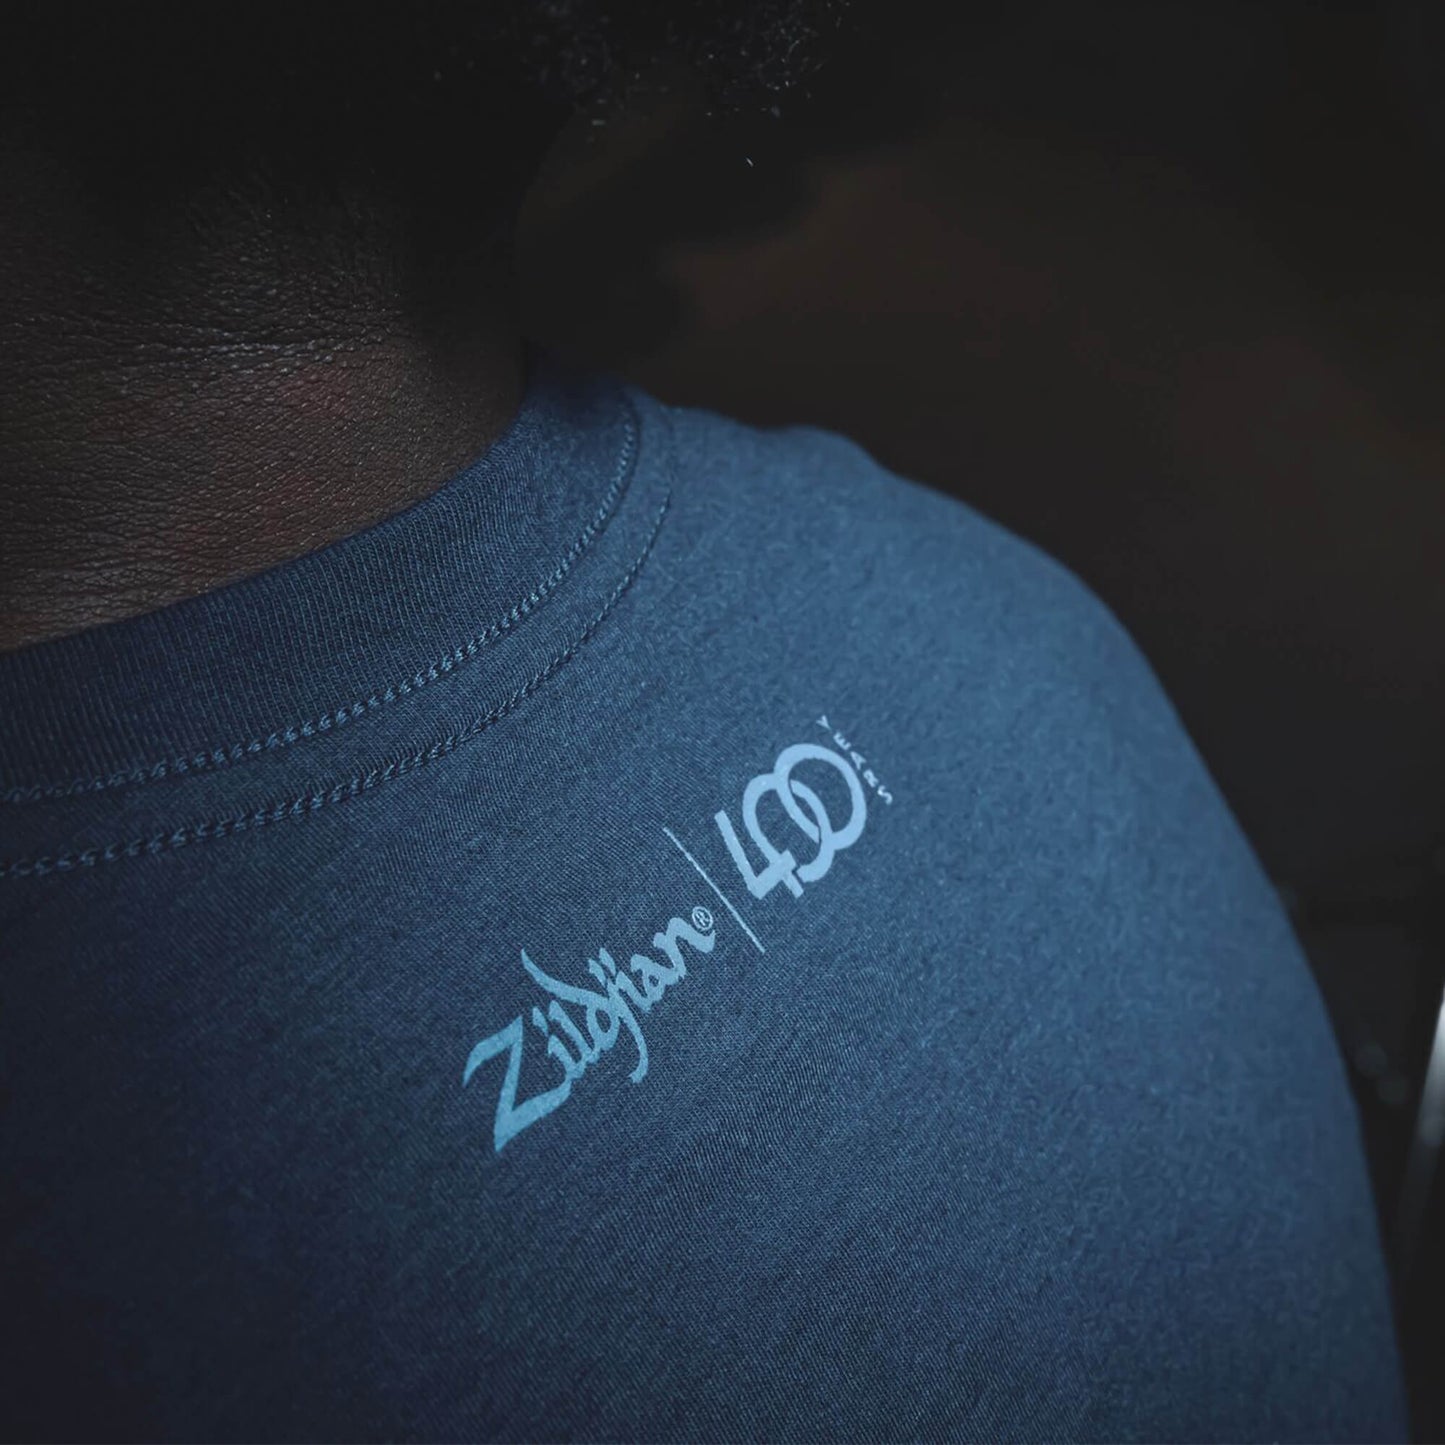 Zildjian Limited Edition 400th Anniversary T-Shirt Box Set